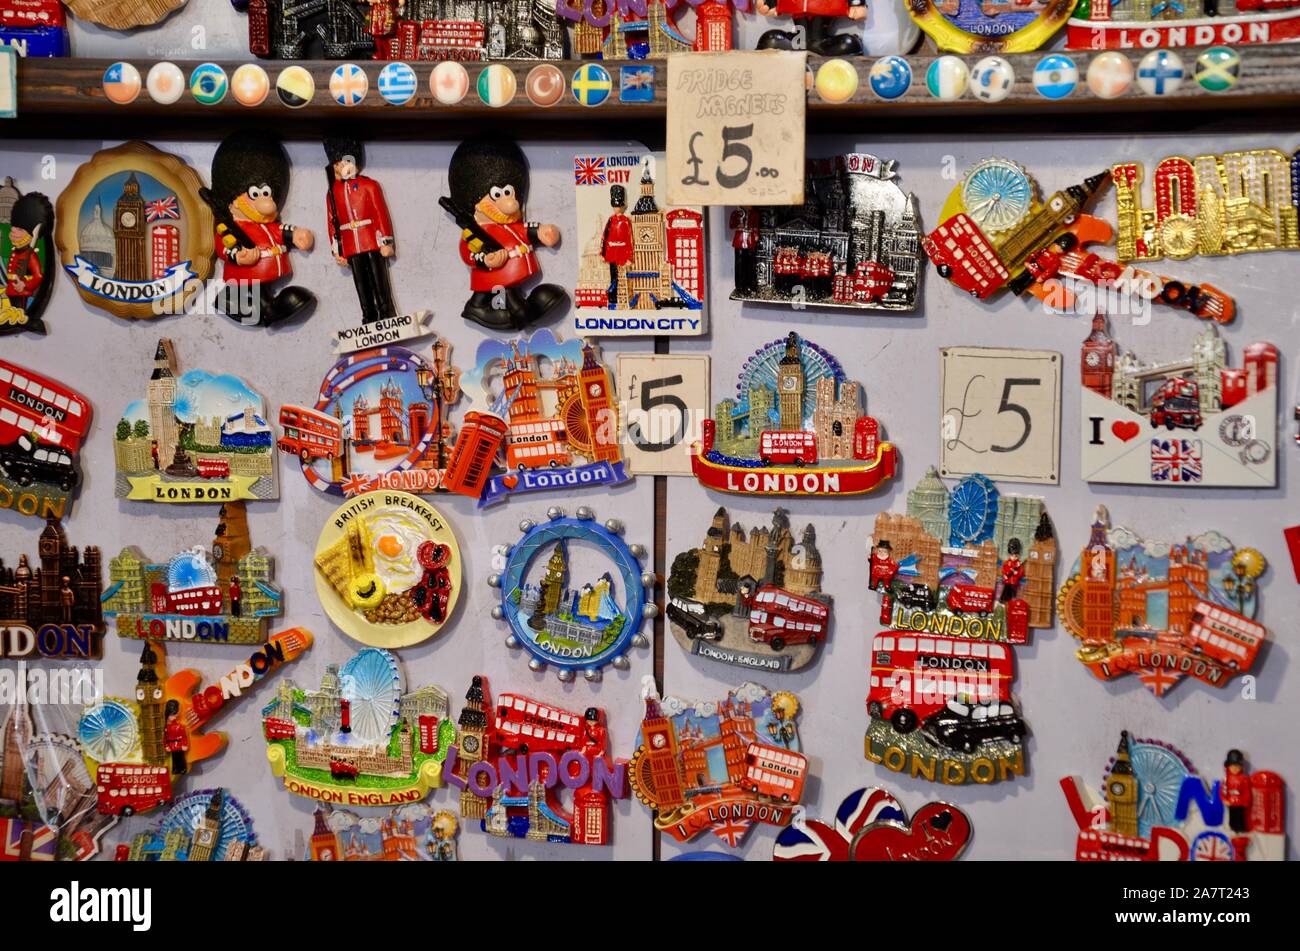 Malaga, Spain- April 03, 2018: Ceramic souvenirs for sale in Malaga, Spain.  Colorful Fridge souvenir magnets Stock Photo - Alamy